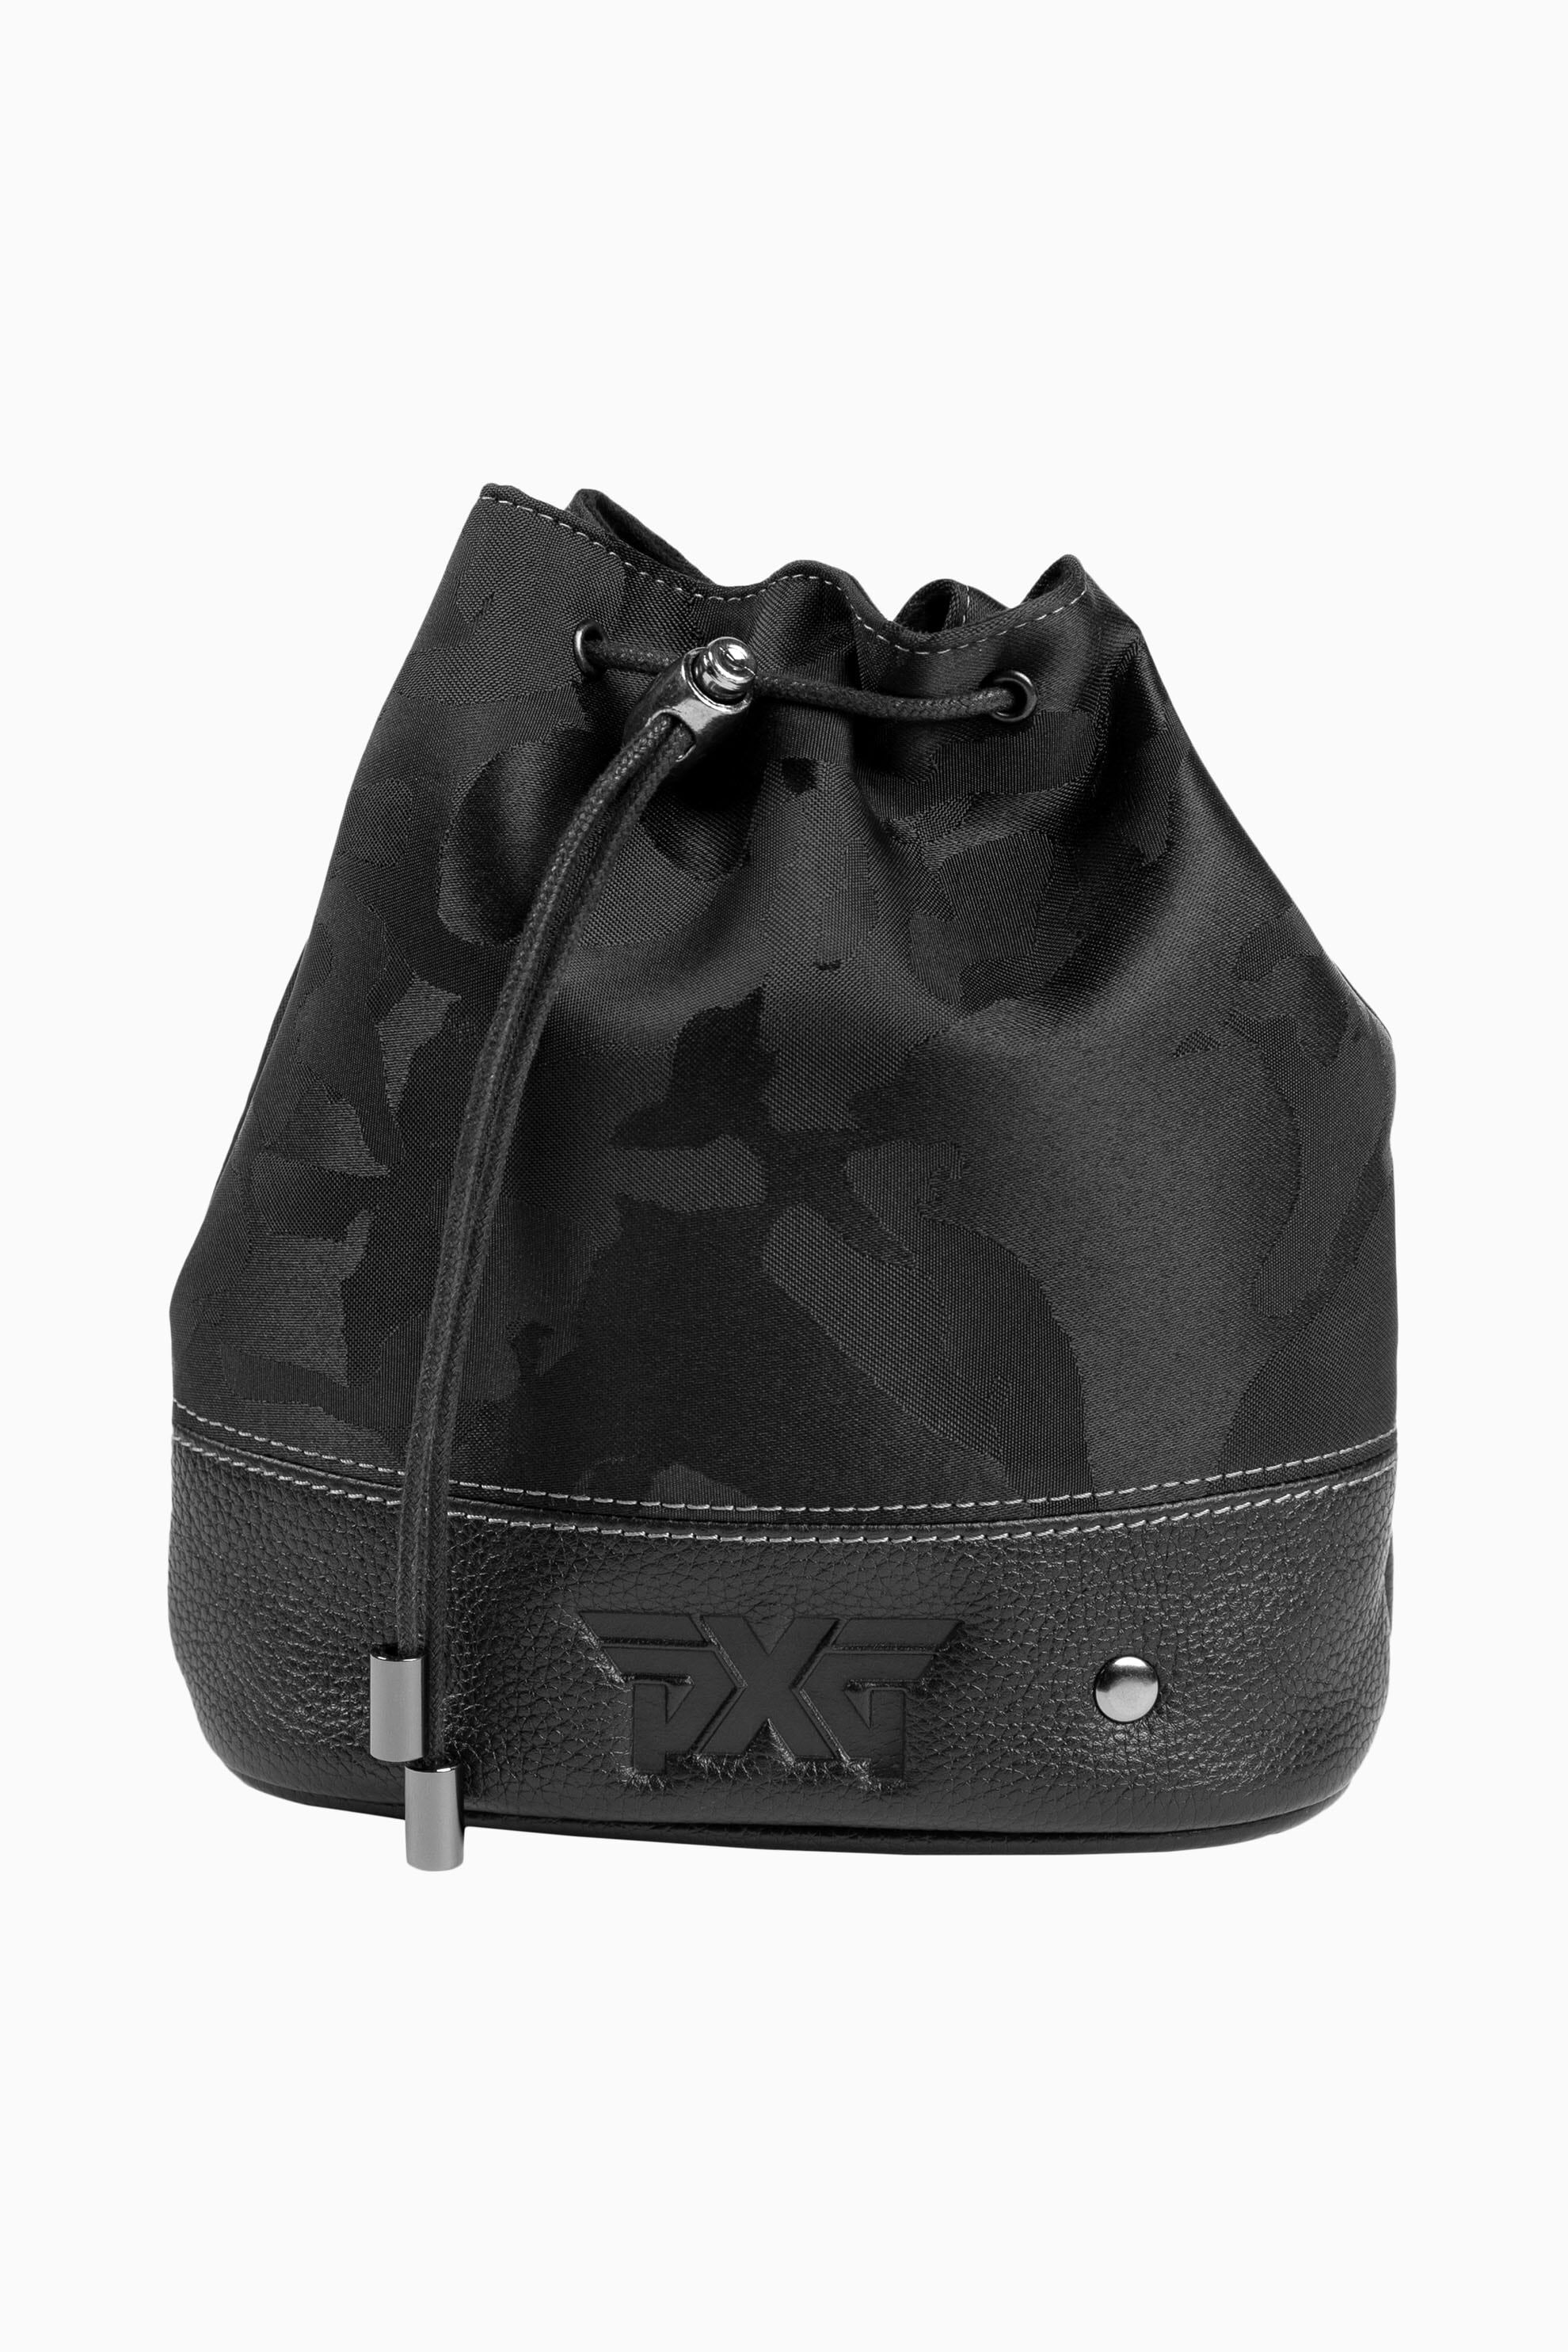 PXG Bags and Totes: Premium Design & Ultimate Convenience